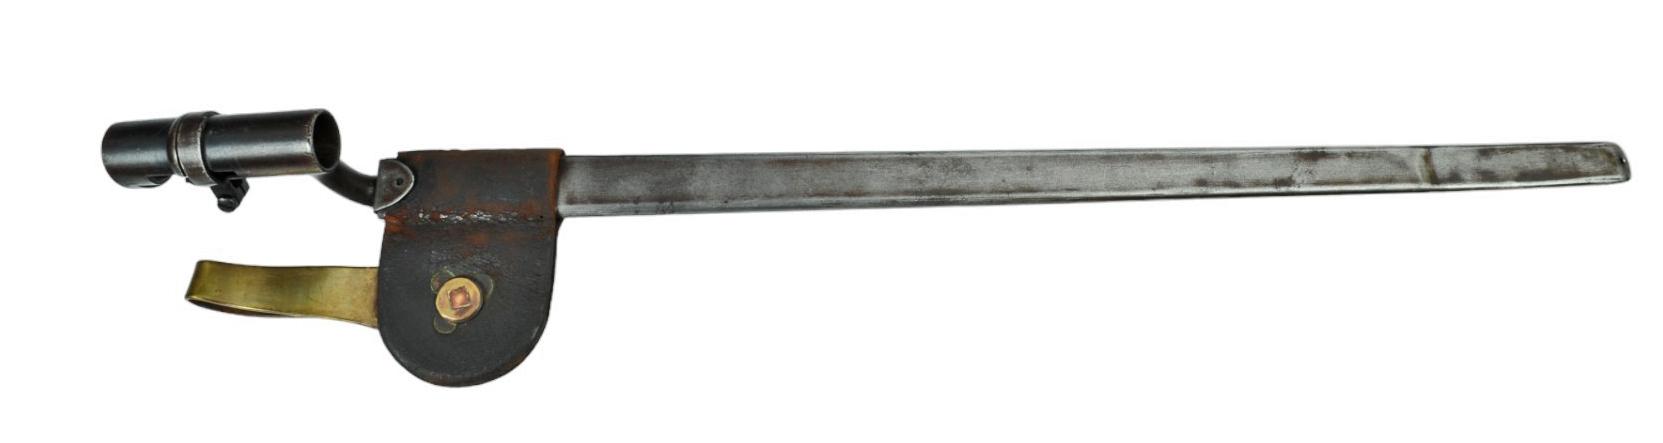 US Military Indian Wars era M1873 45/70 Trapdoor Socket Bayonet  (VDM)